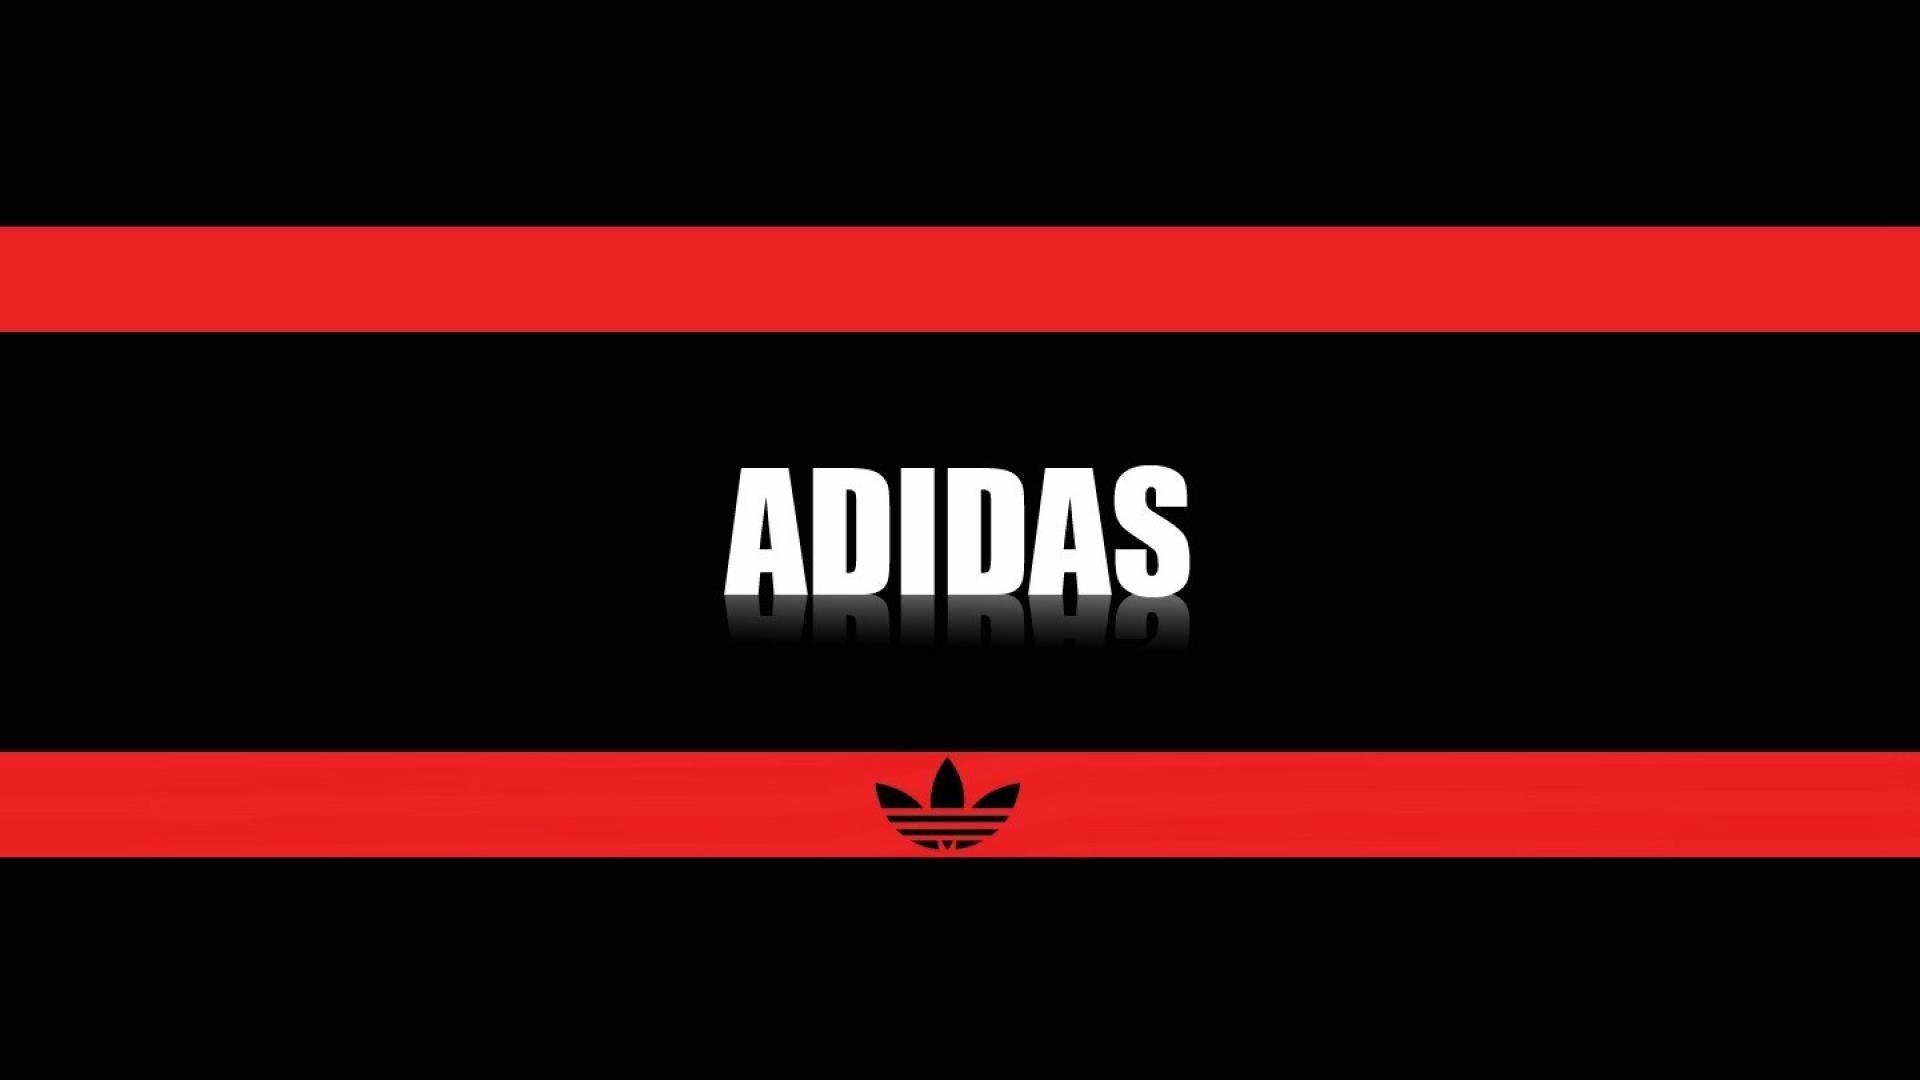 Adidas Logo, Adidas Brand Logo Red And Black Wallpaper